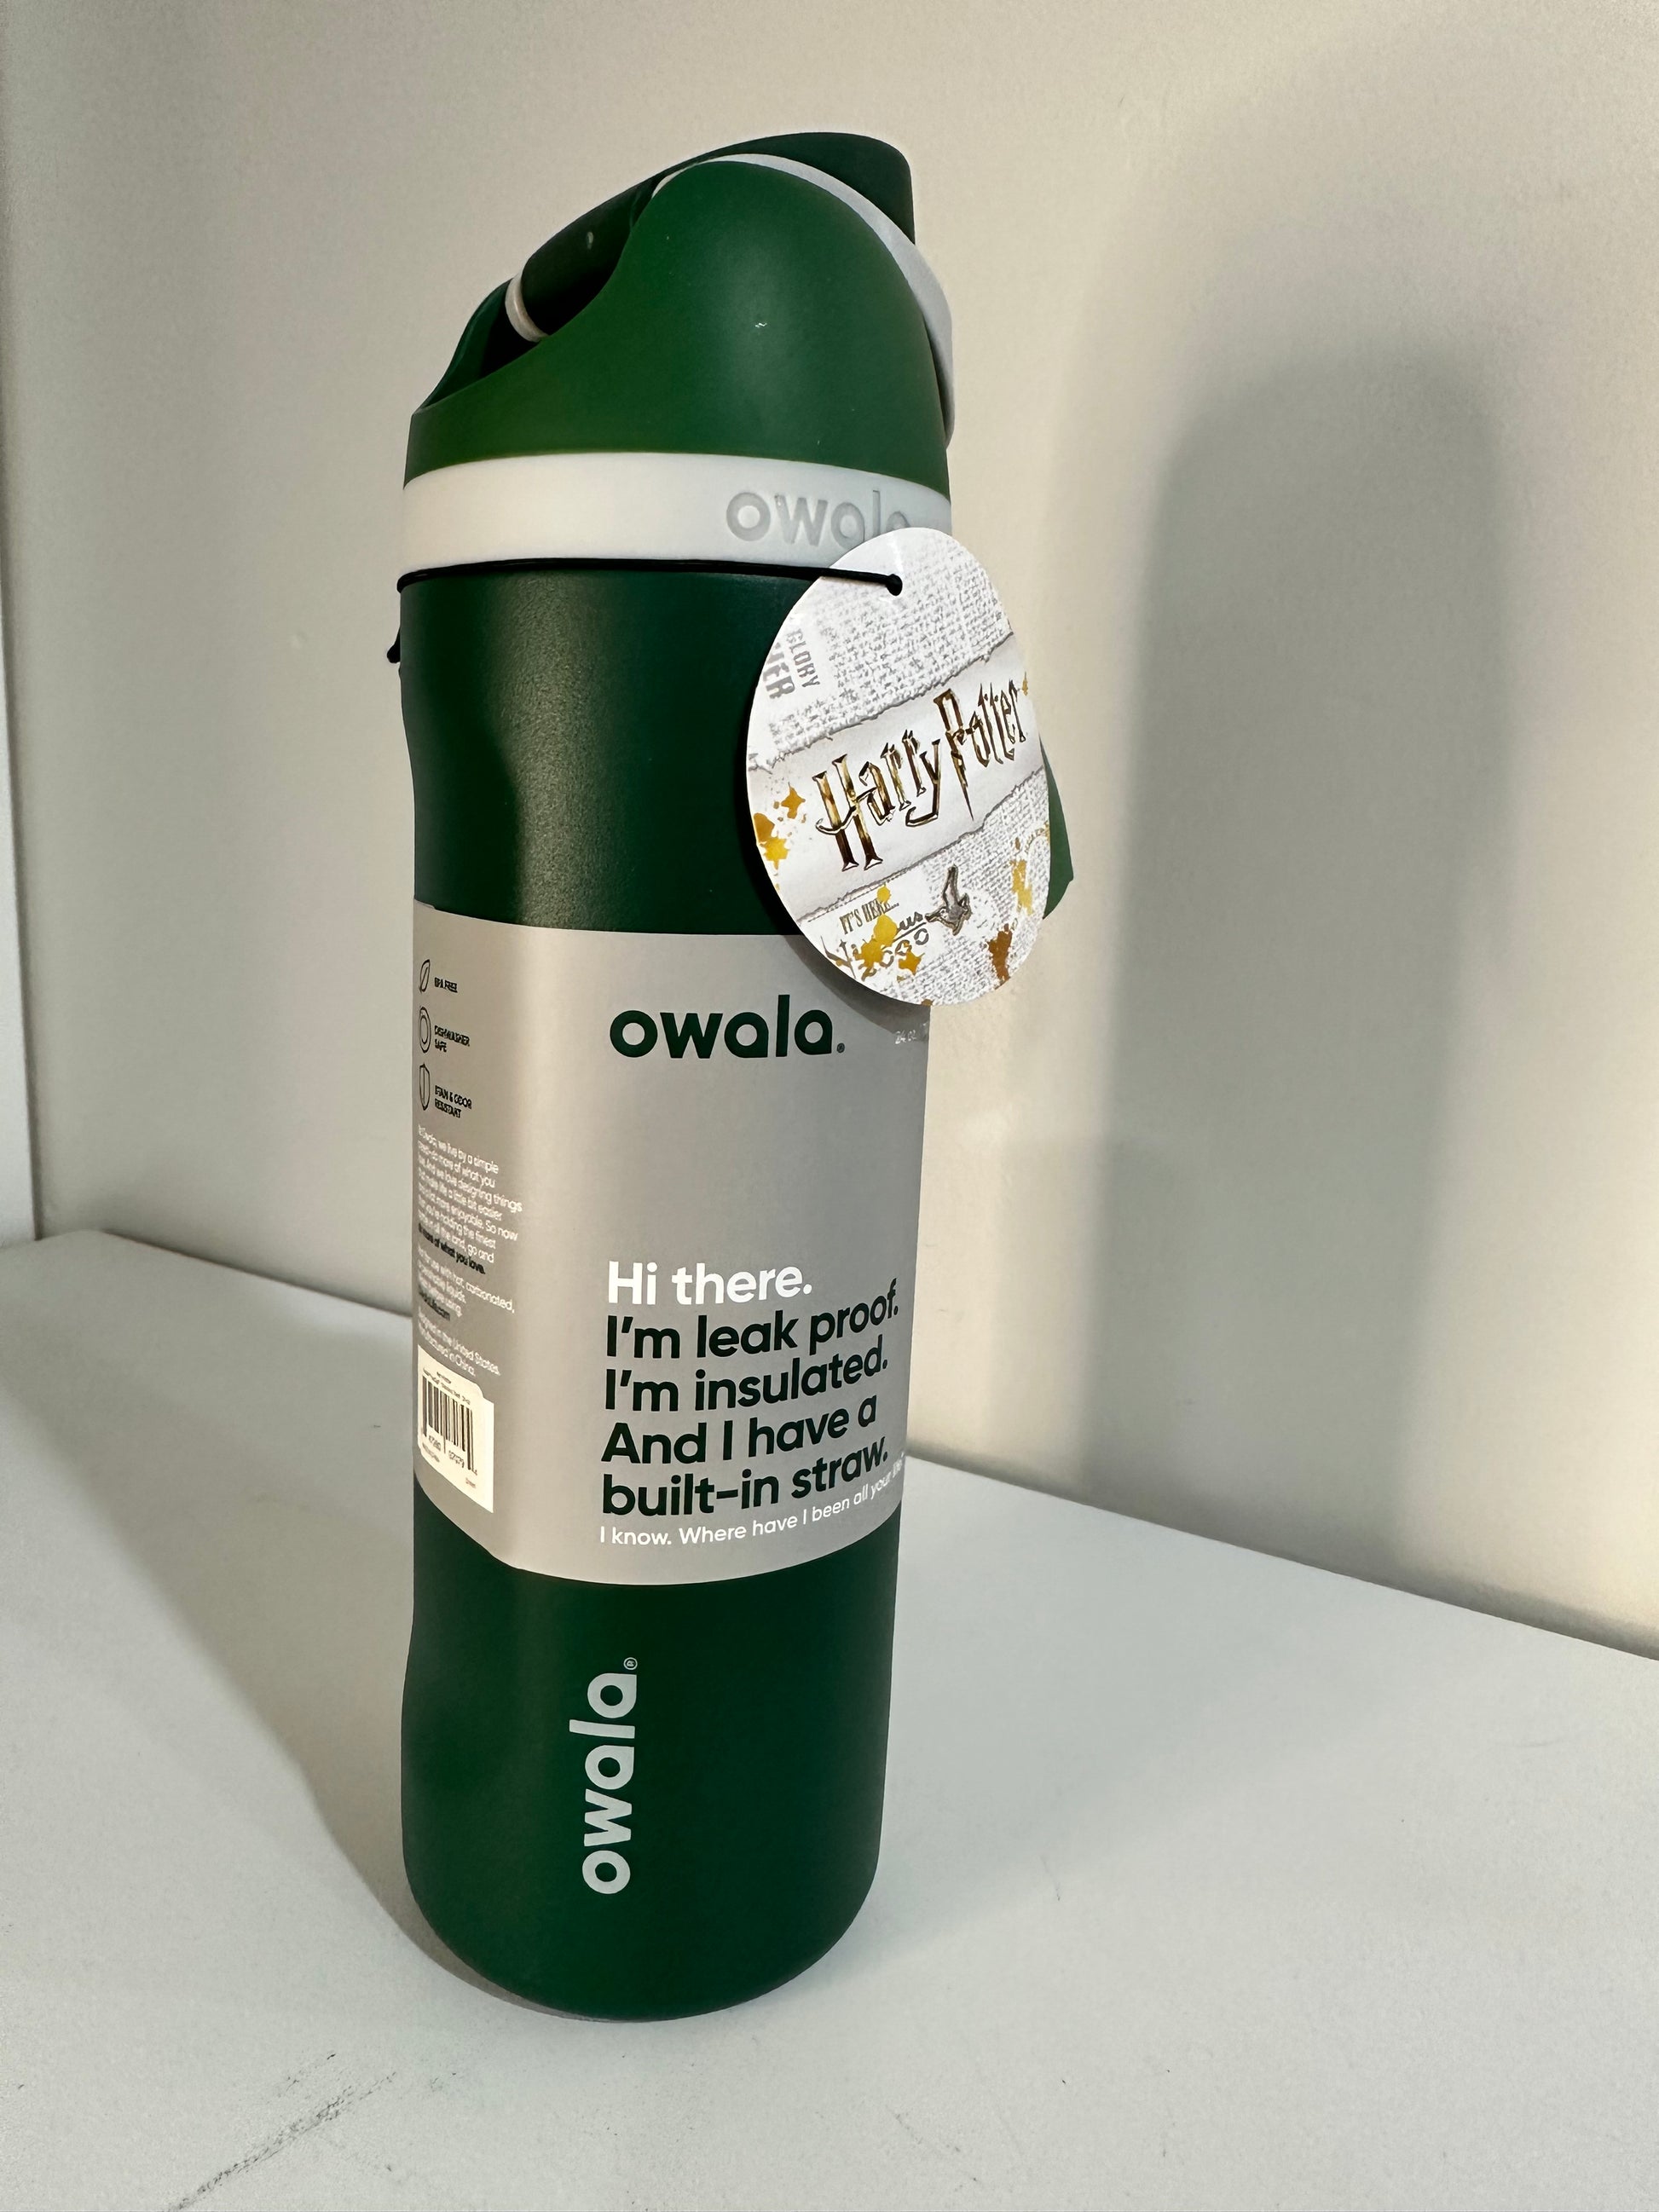 Owala 40 oz Canyon Falcon FreeSip Water Bottle